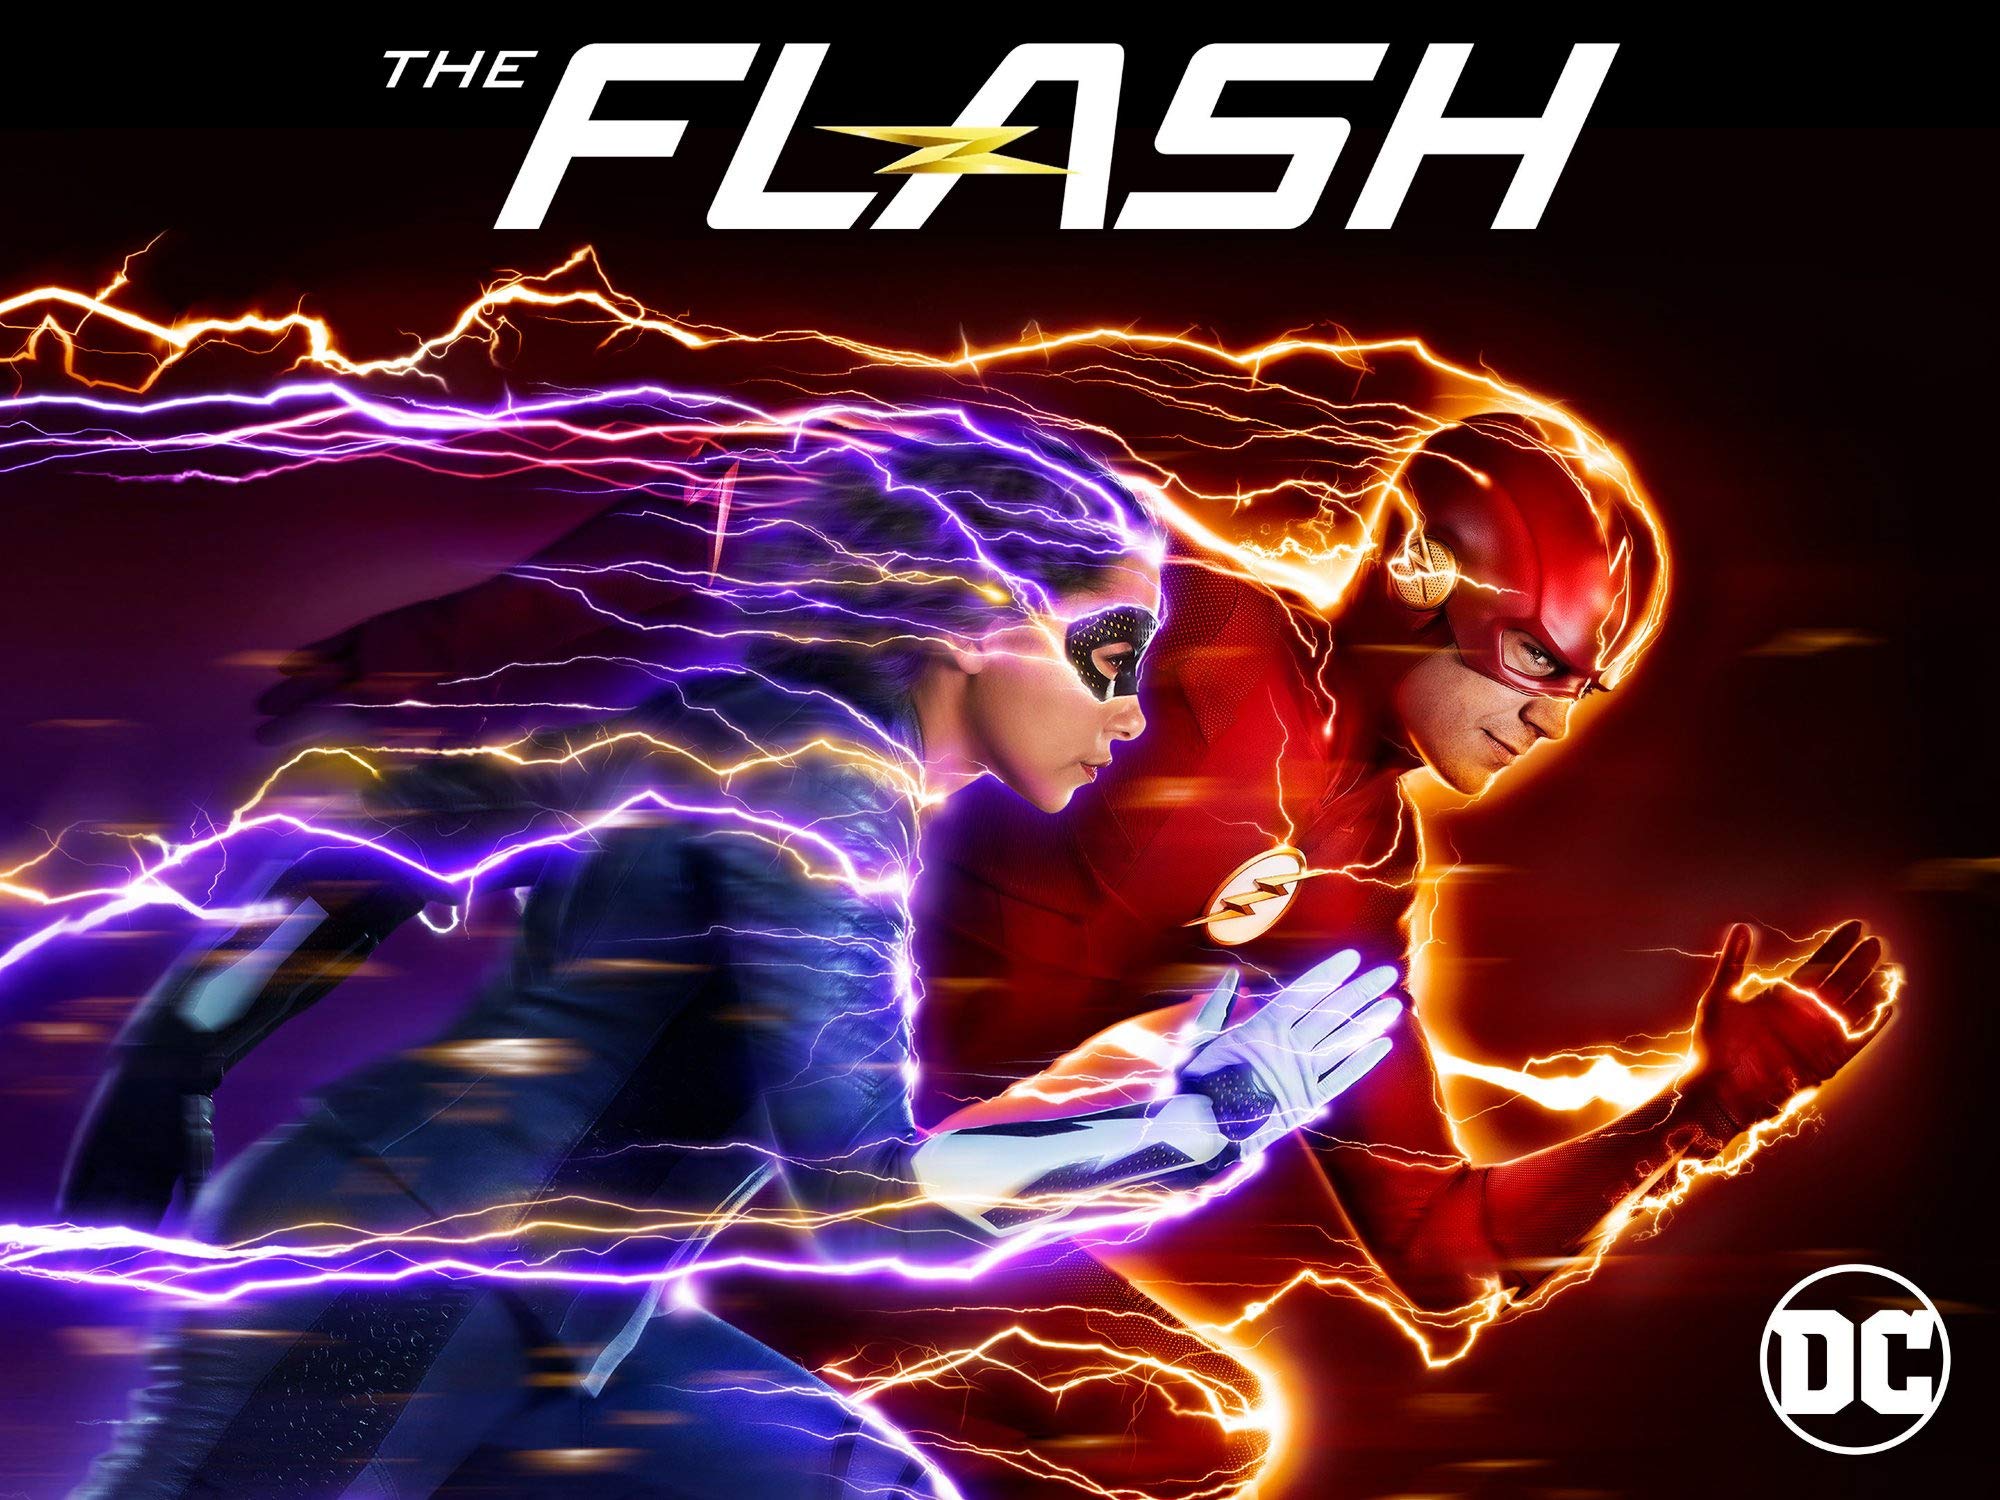 The Flash DC Universe